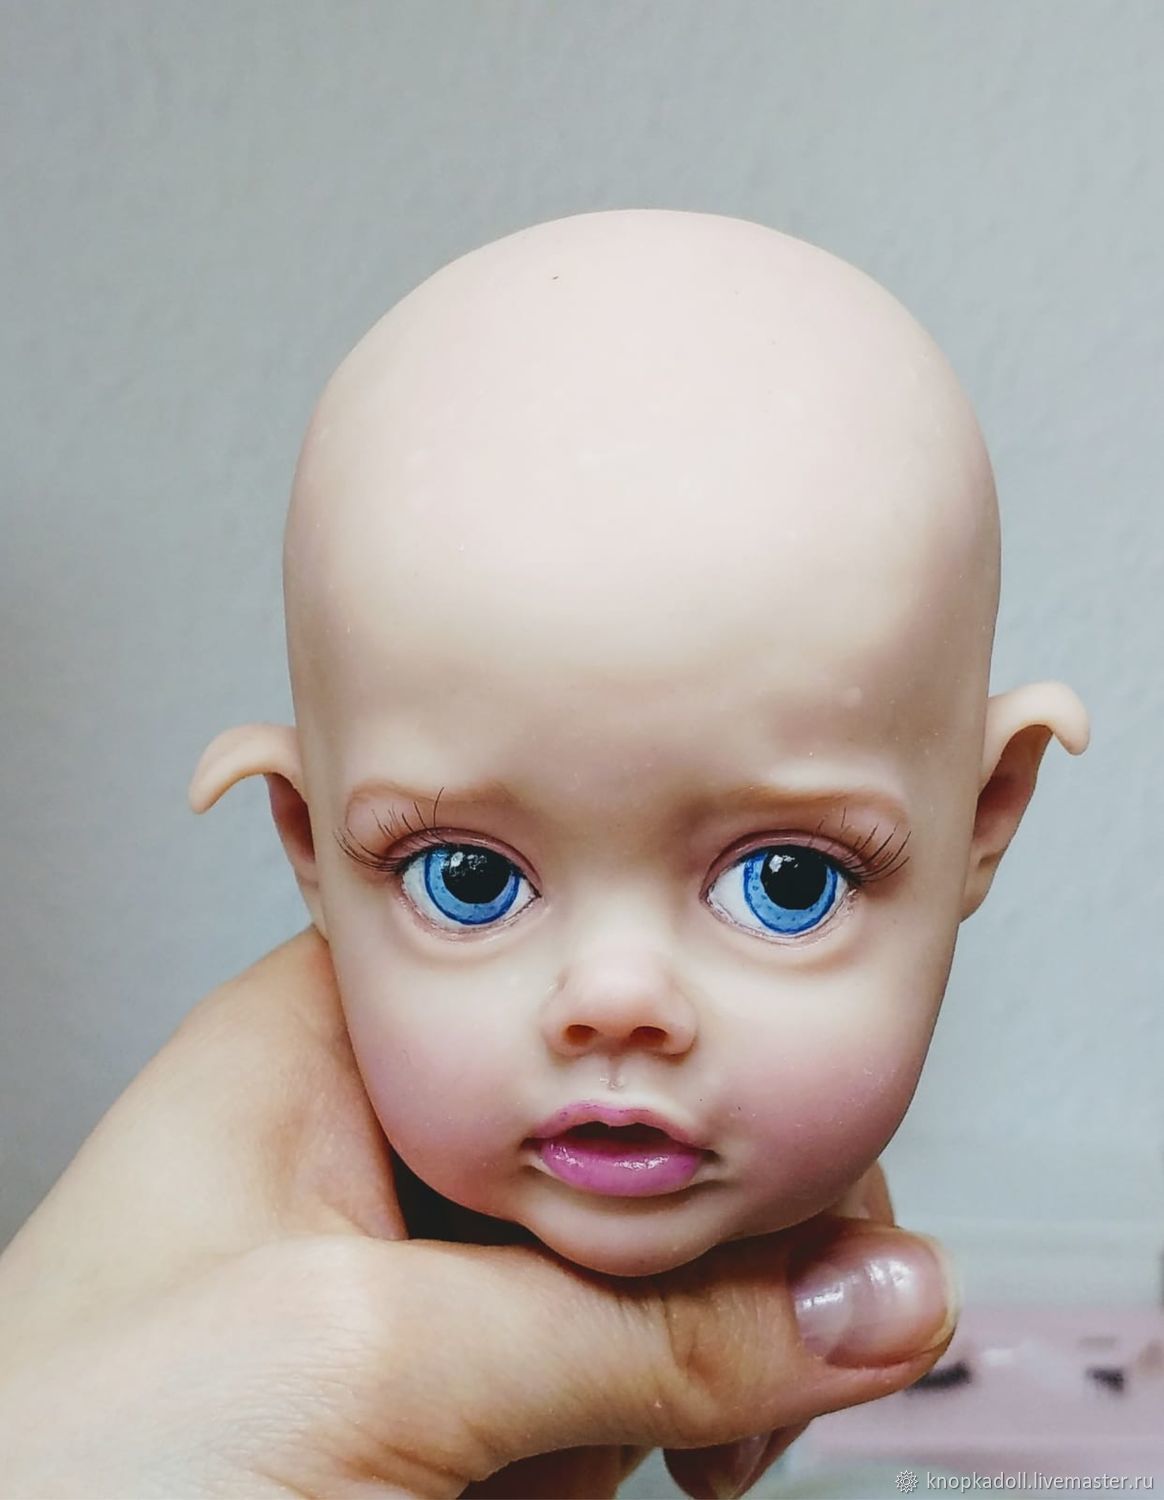 Купить куклу молд. Молд кукла. Молды для кукол. Молд лицо куклы. Молд лица младенца.